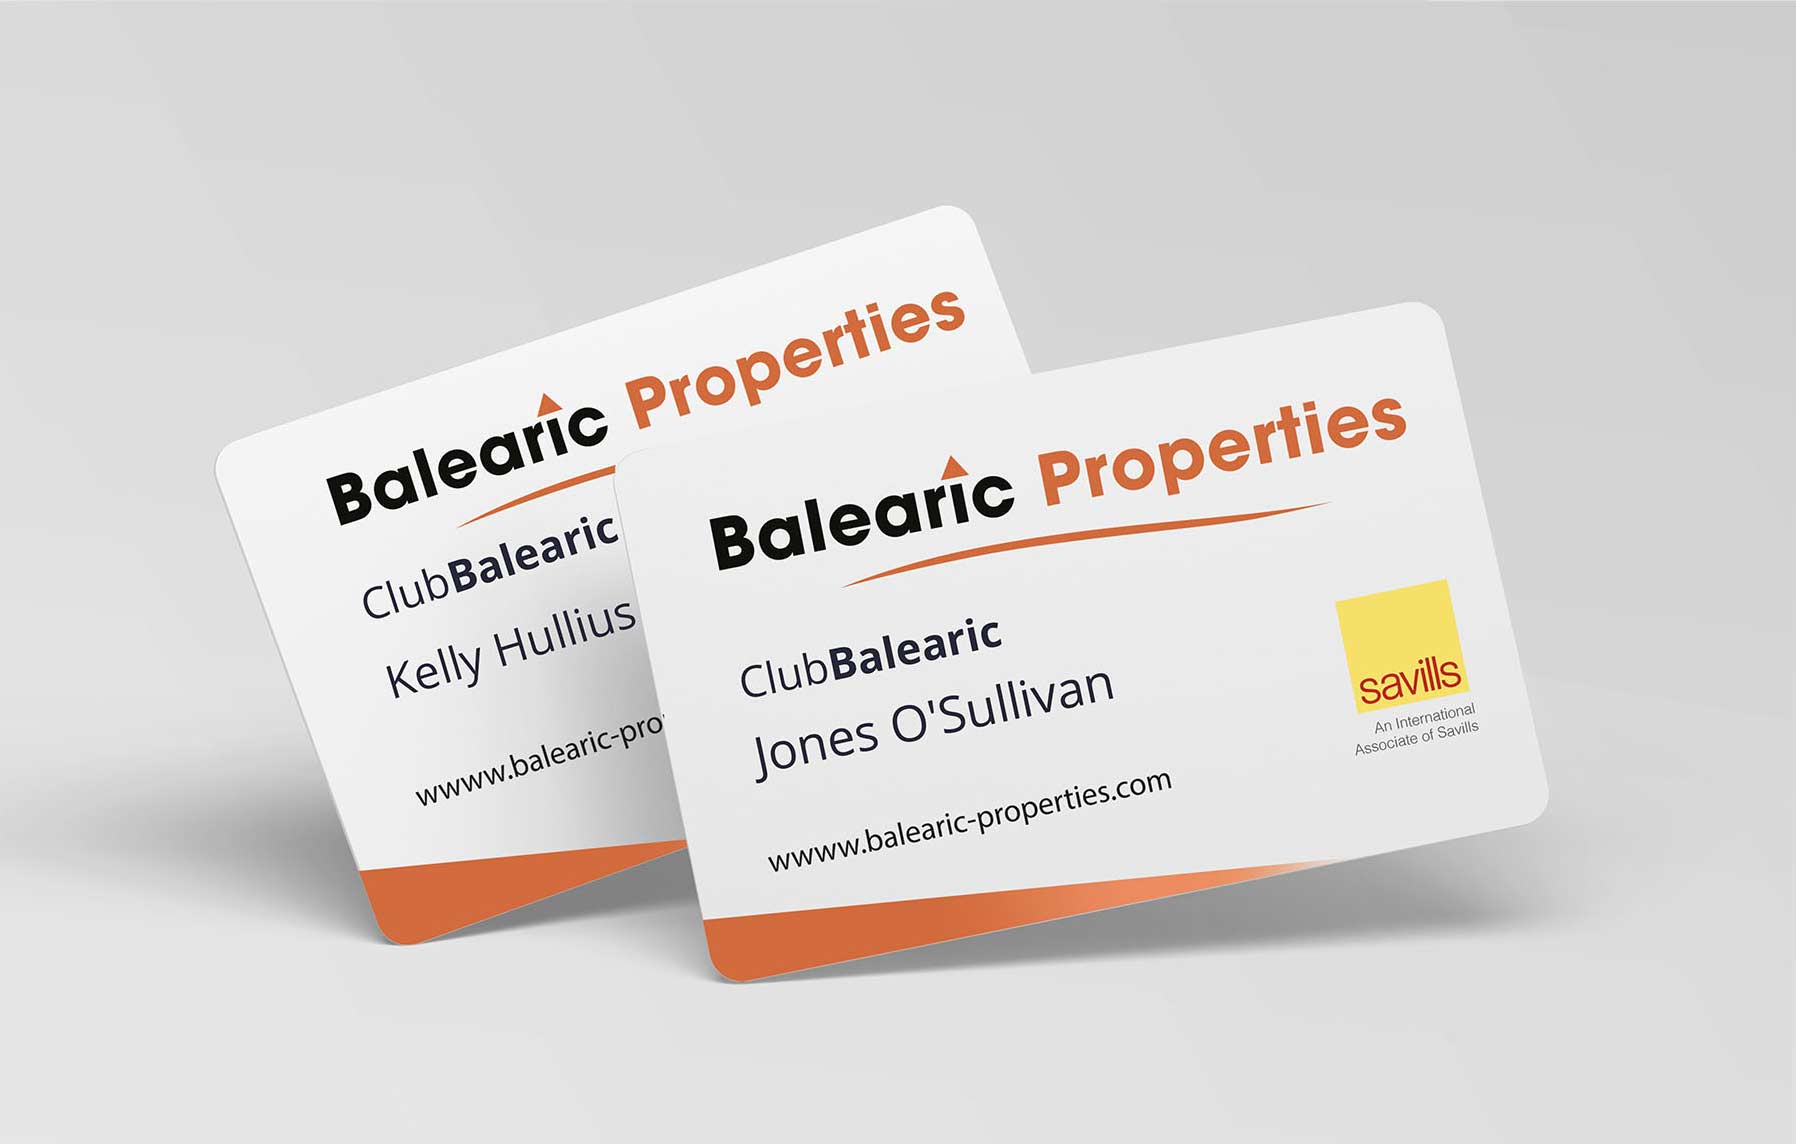 Club Balearic Properties